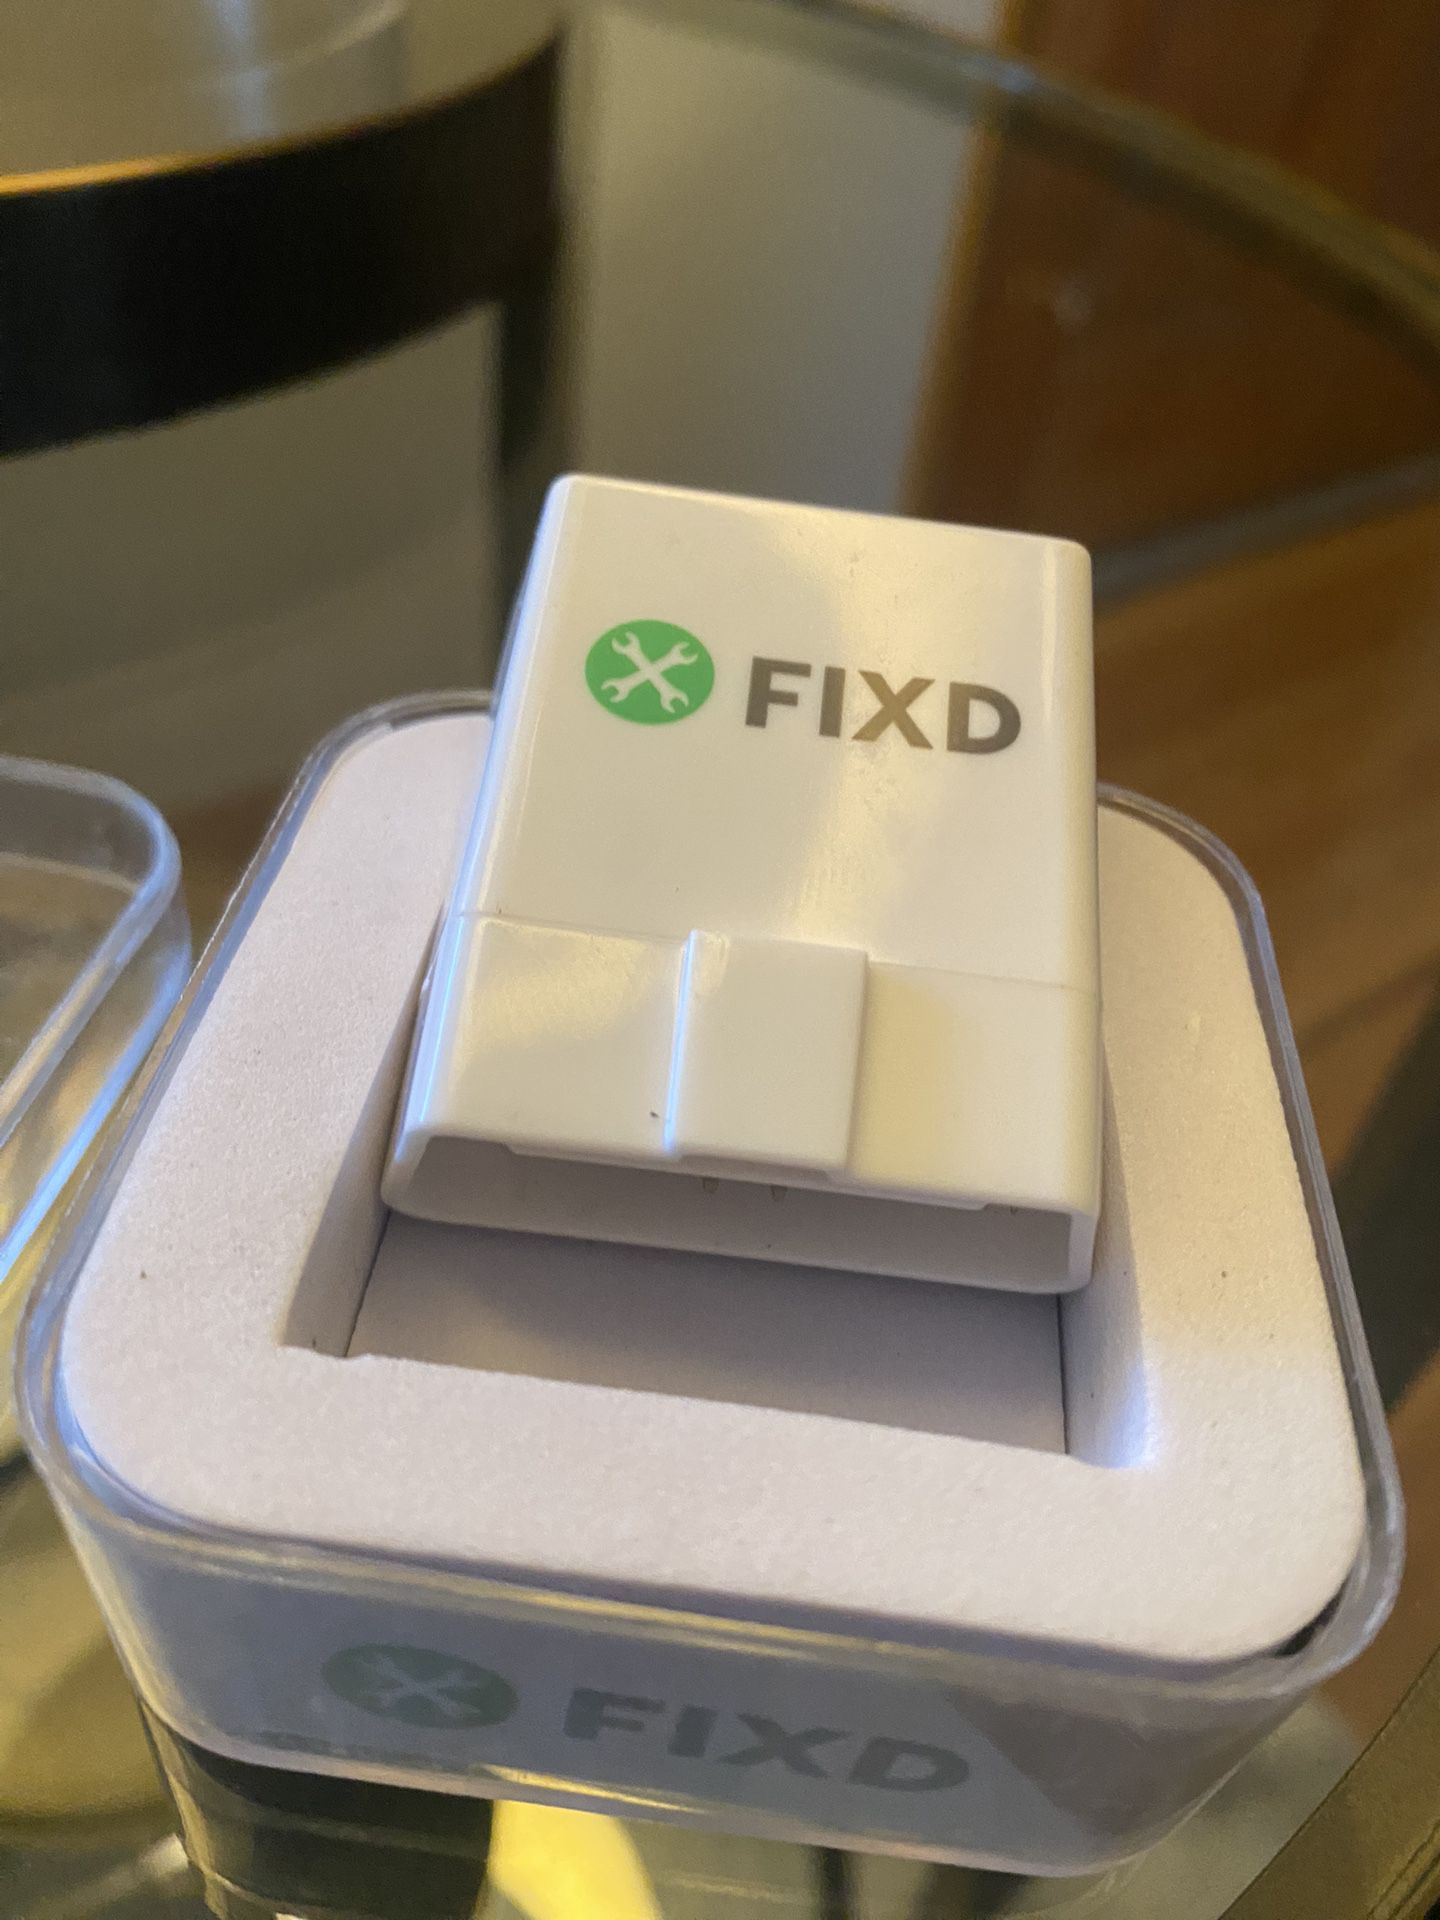 FIXD Car Code Scanner